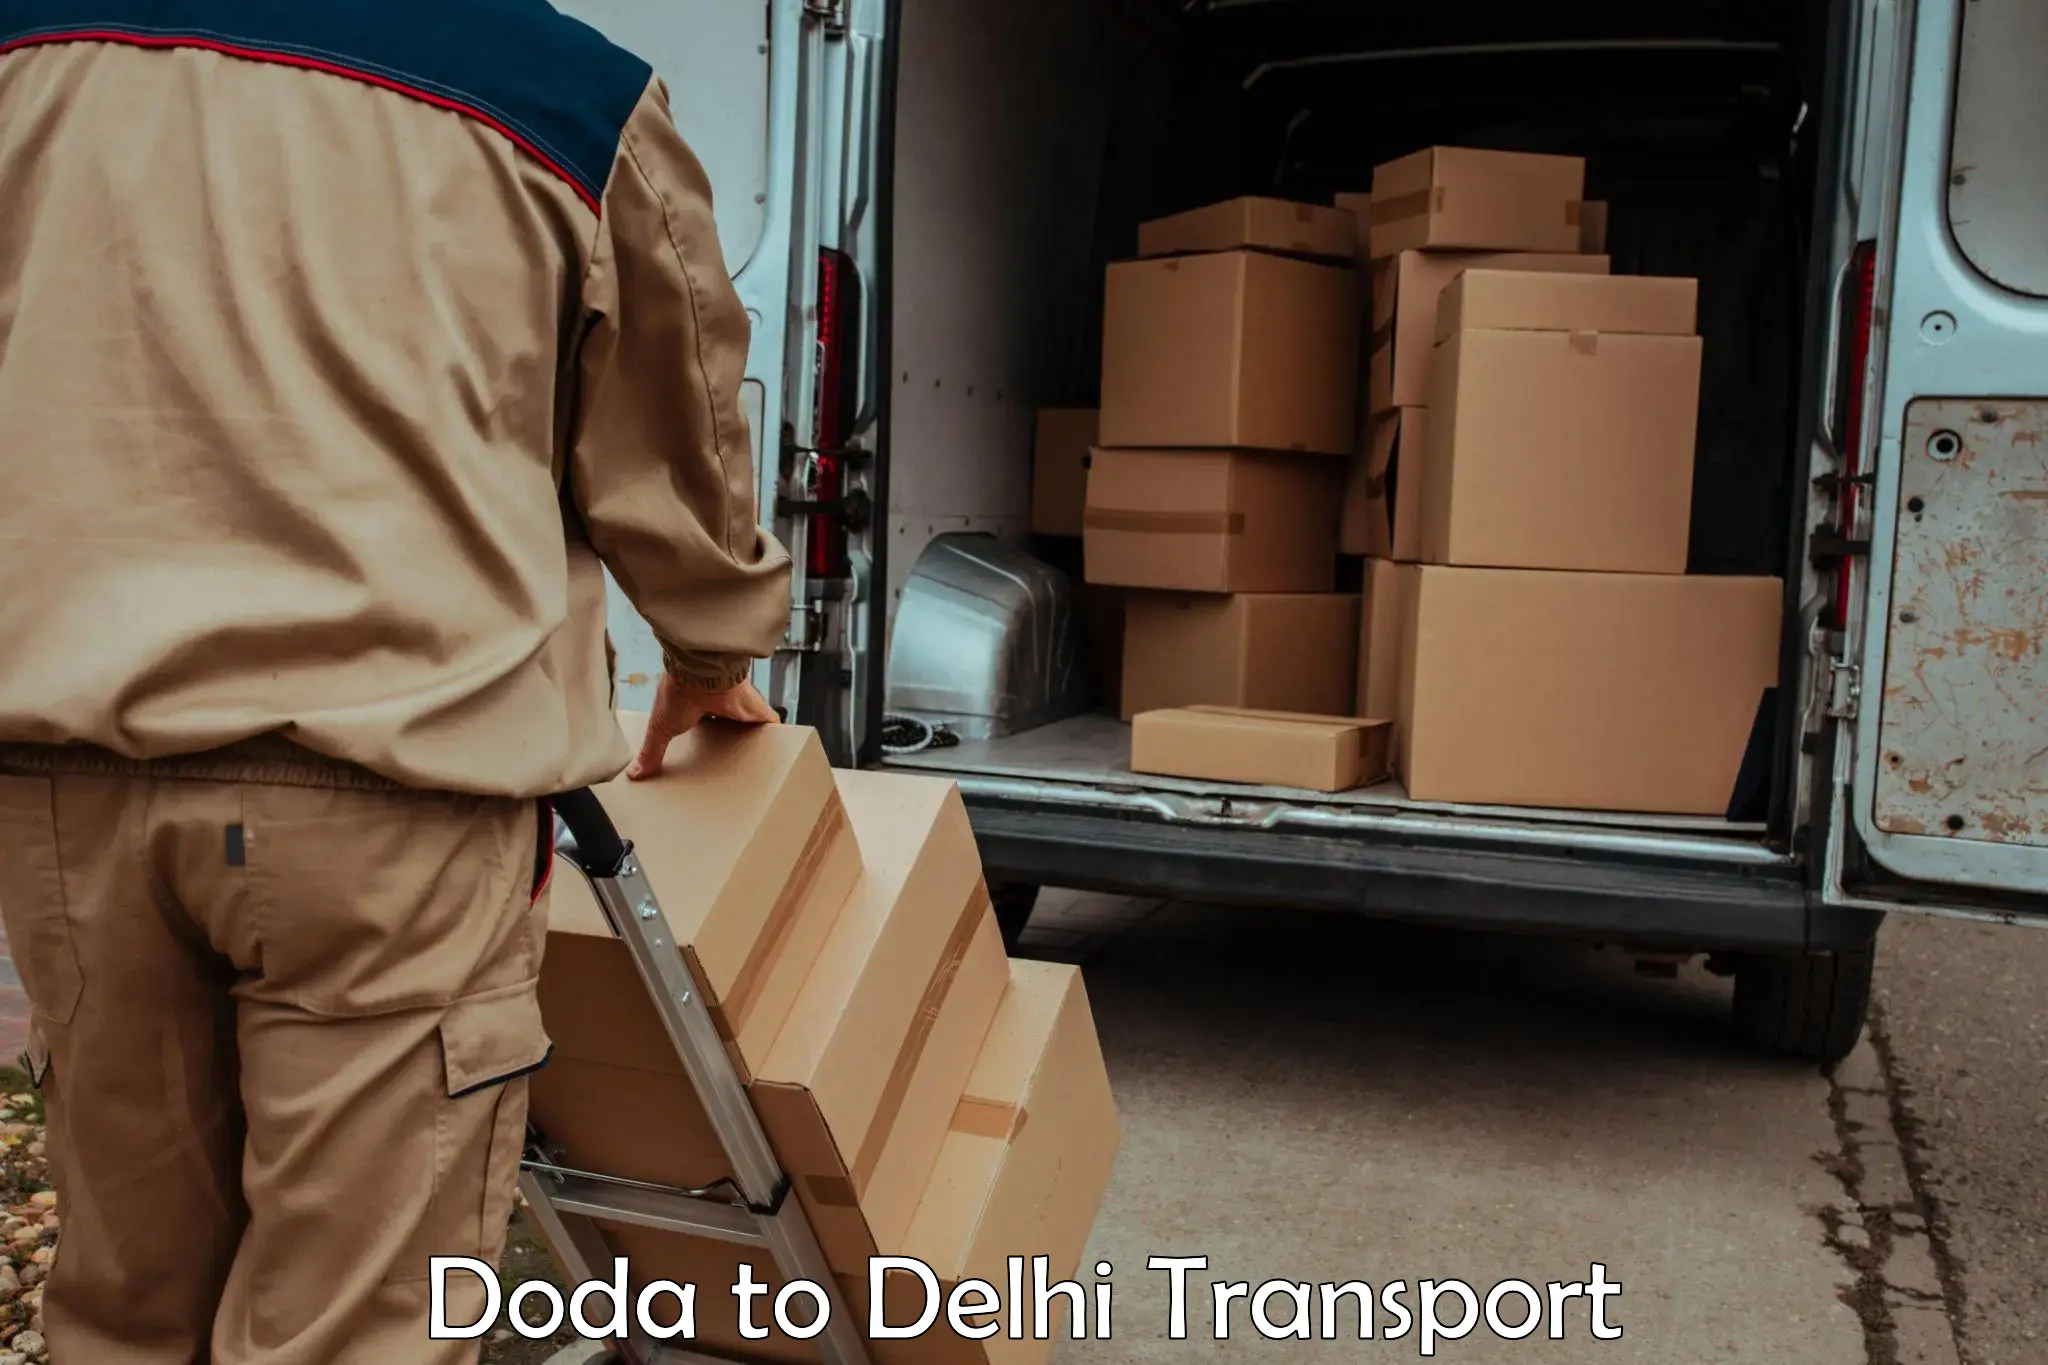 Delivery service Doda to Delhi